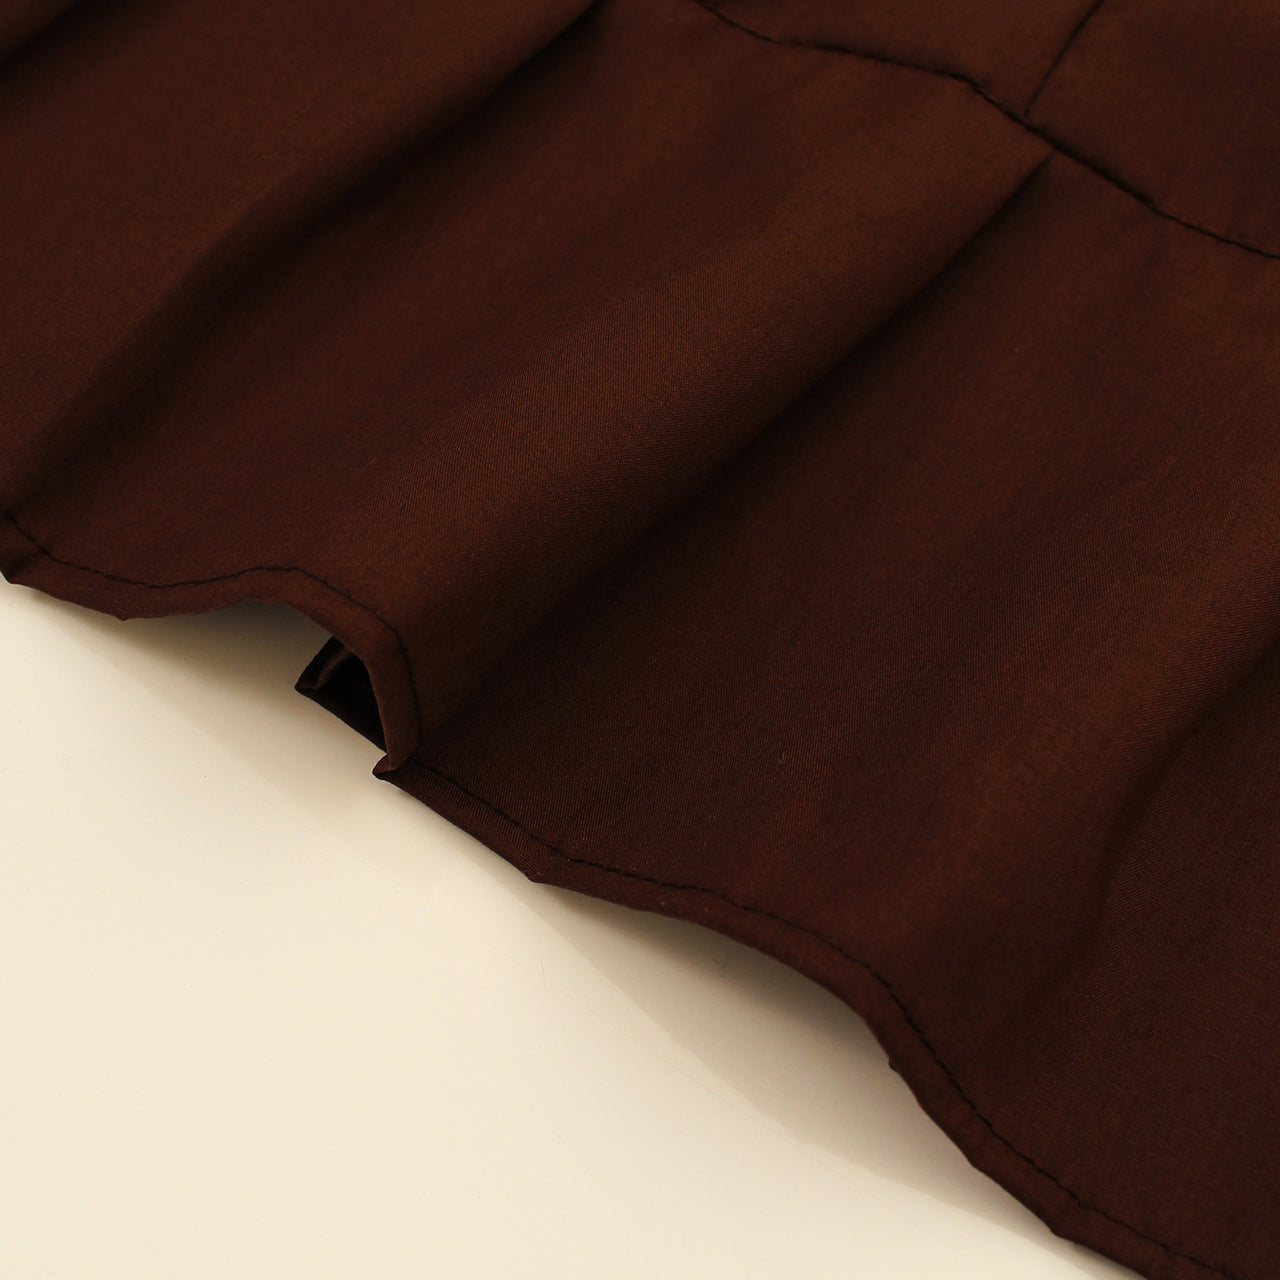 Brown - Sari (Saree) Petticoat - Available in S, M, L & XL - Underskirts For Sari's